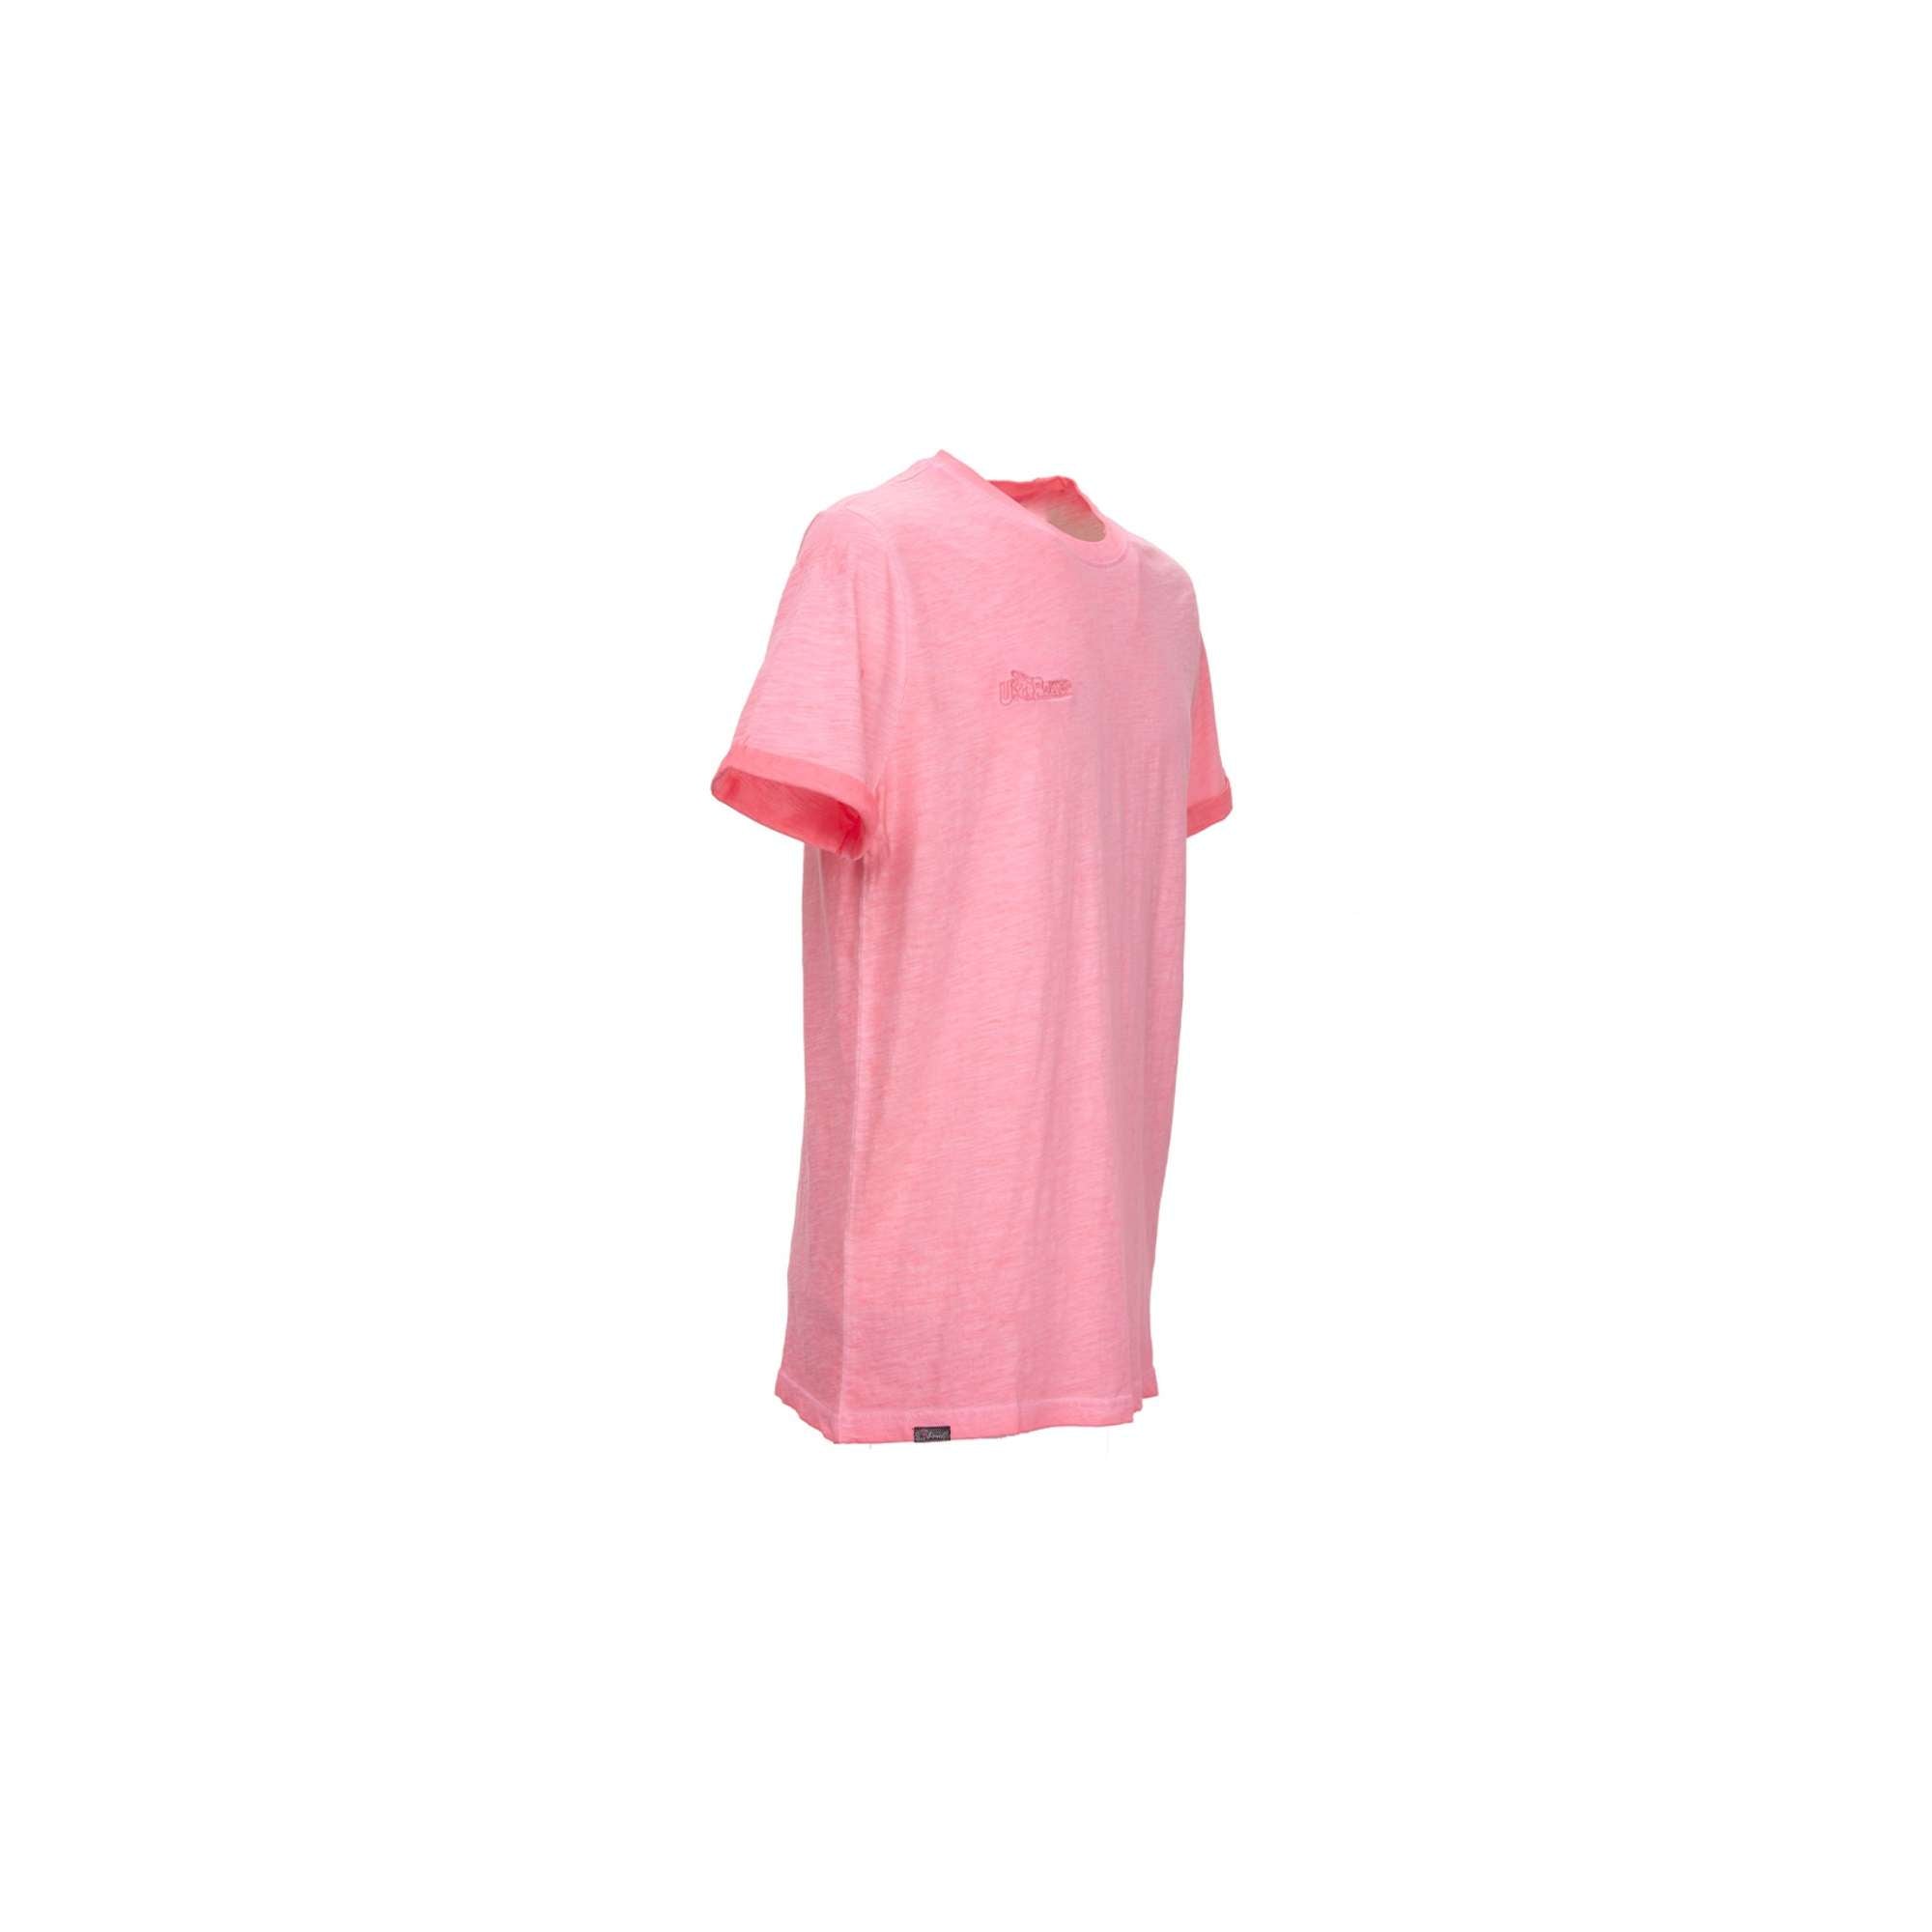 T-Shirt pink fluo - U-Power EY195PF